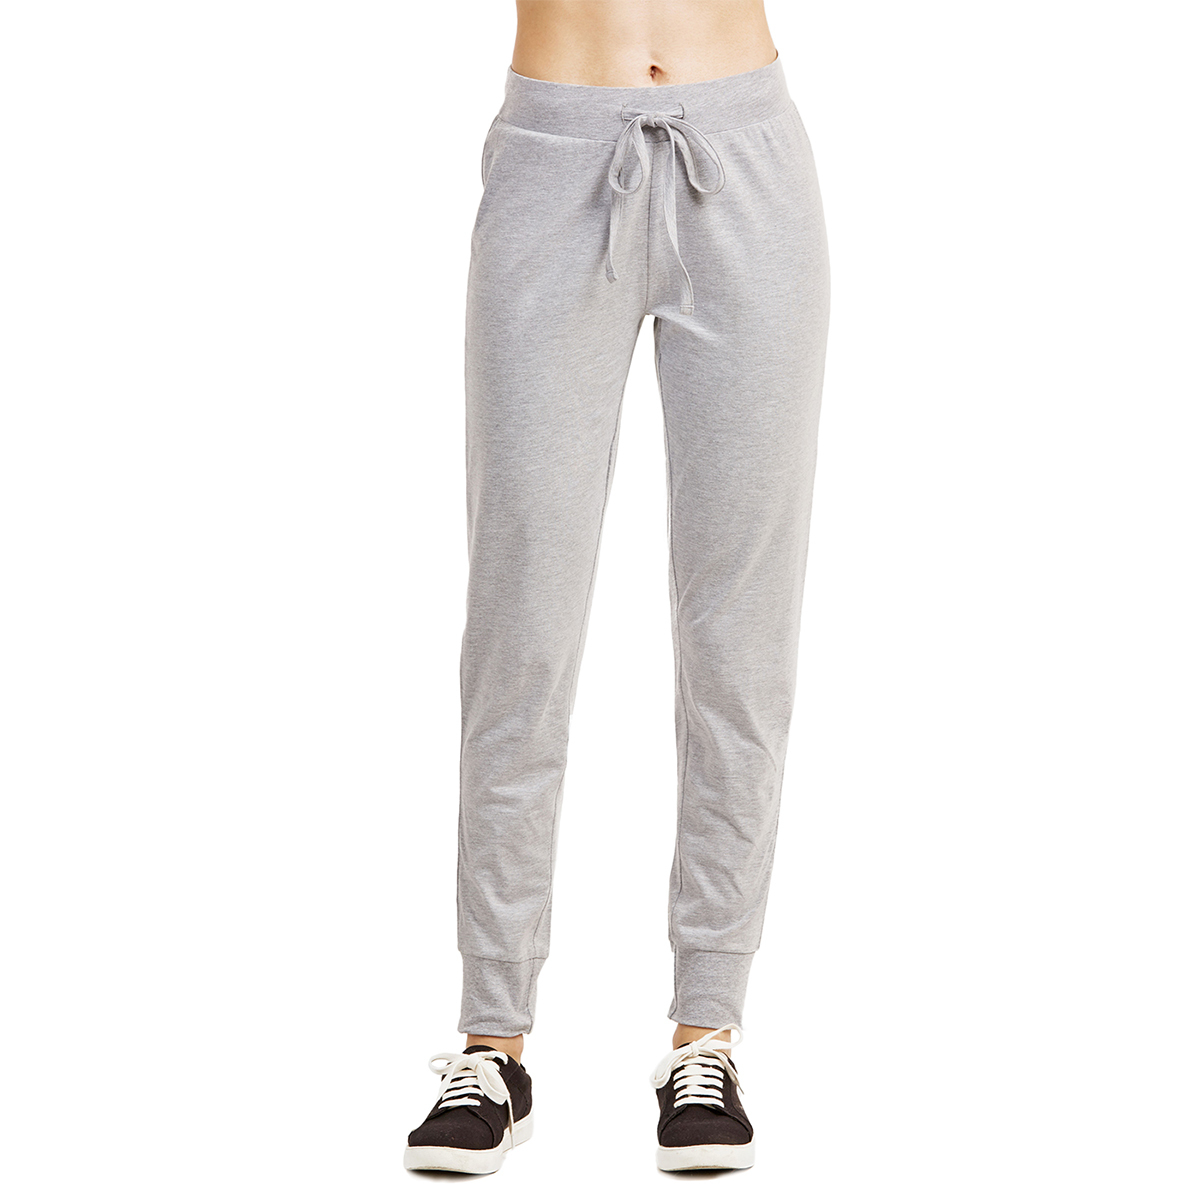 Wholesale Women's Joggers Pants, Medium in Heather Grey - DollarDays